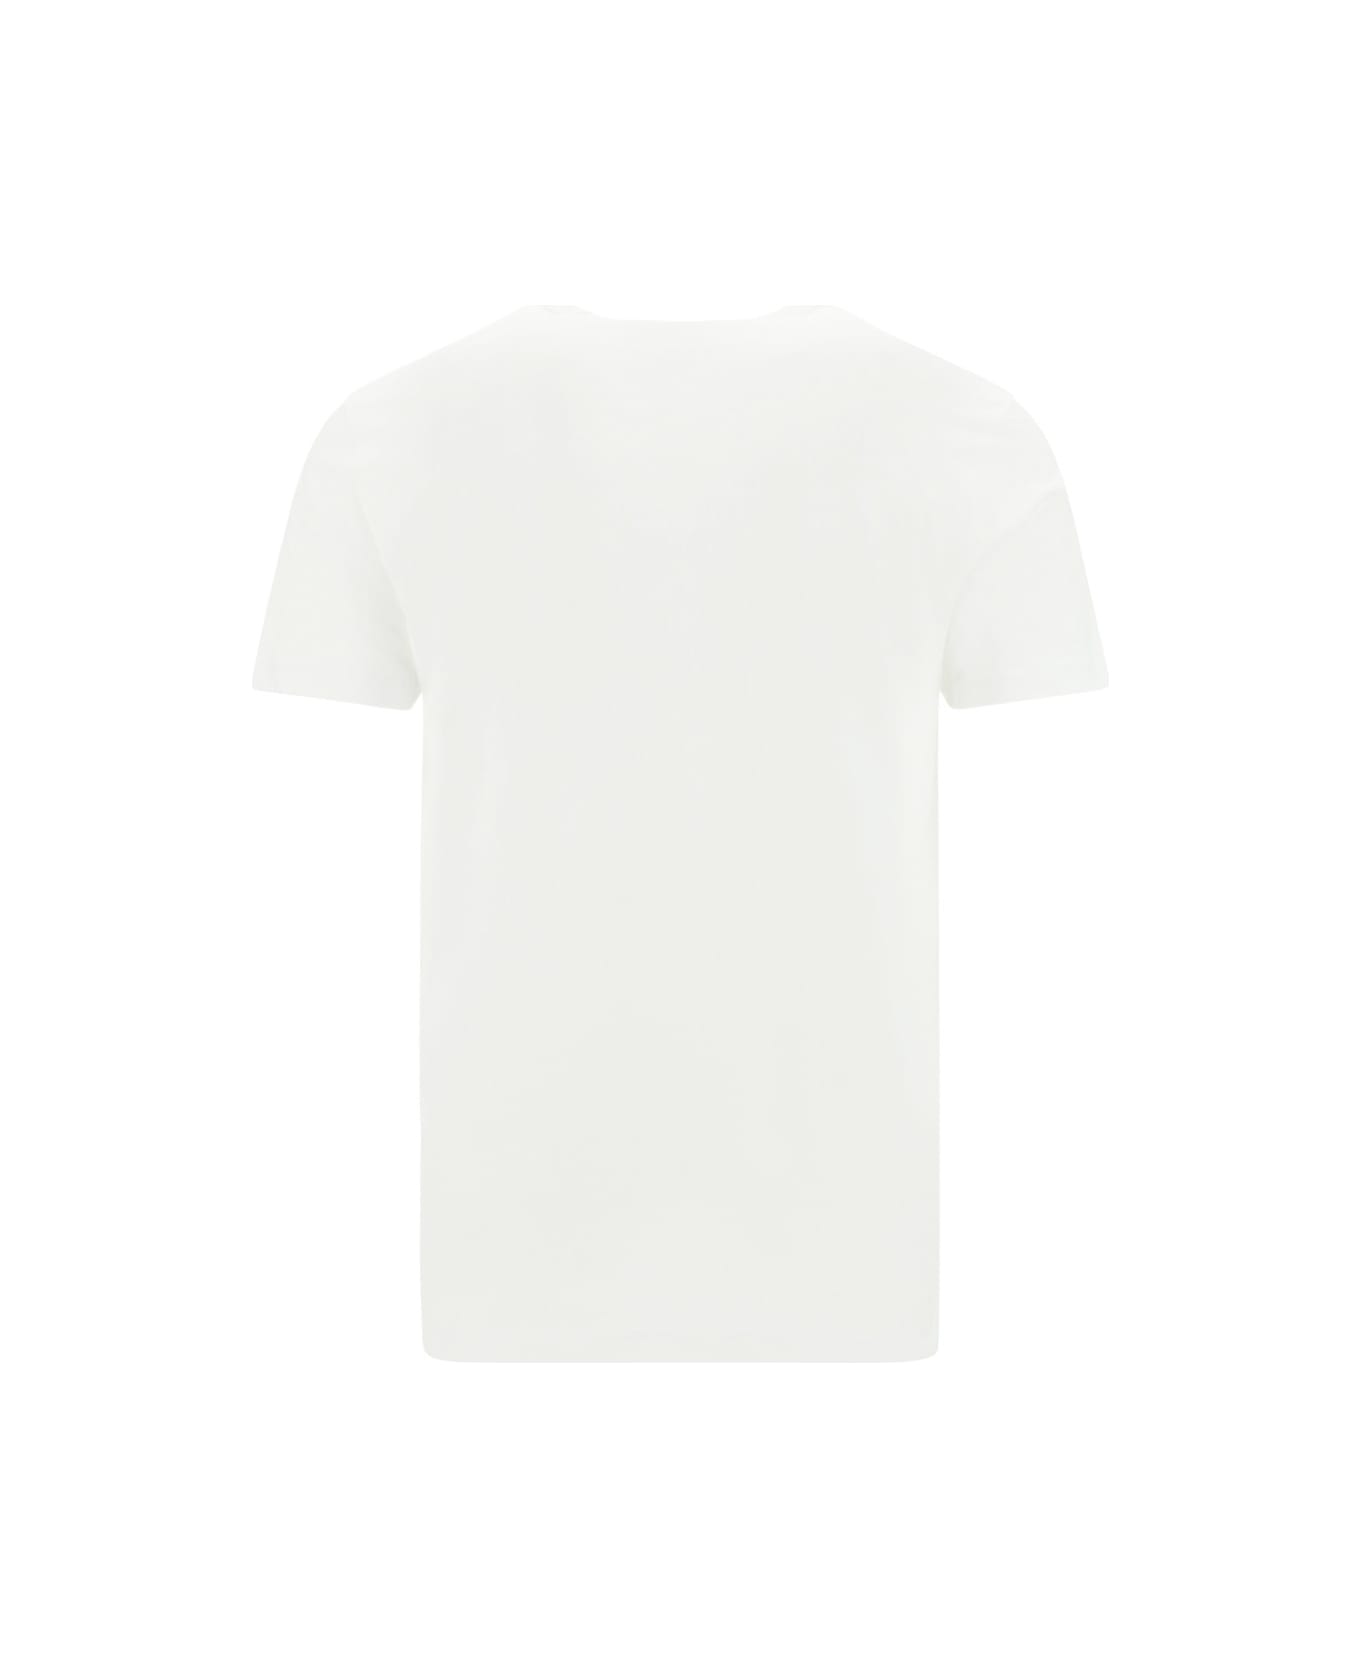 Belstaff Signature T-shirt - White